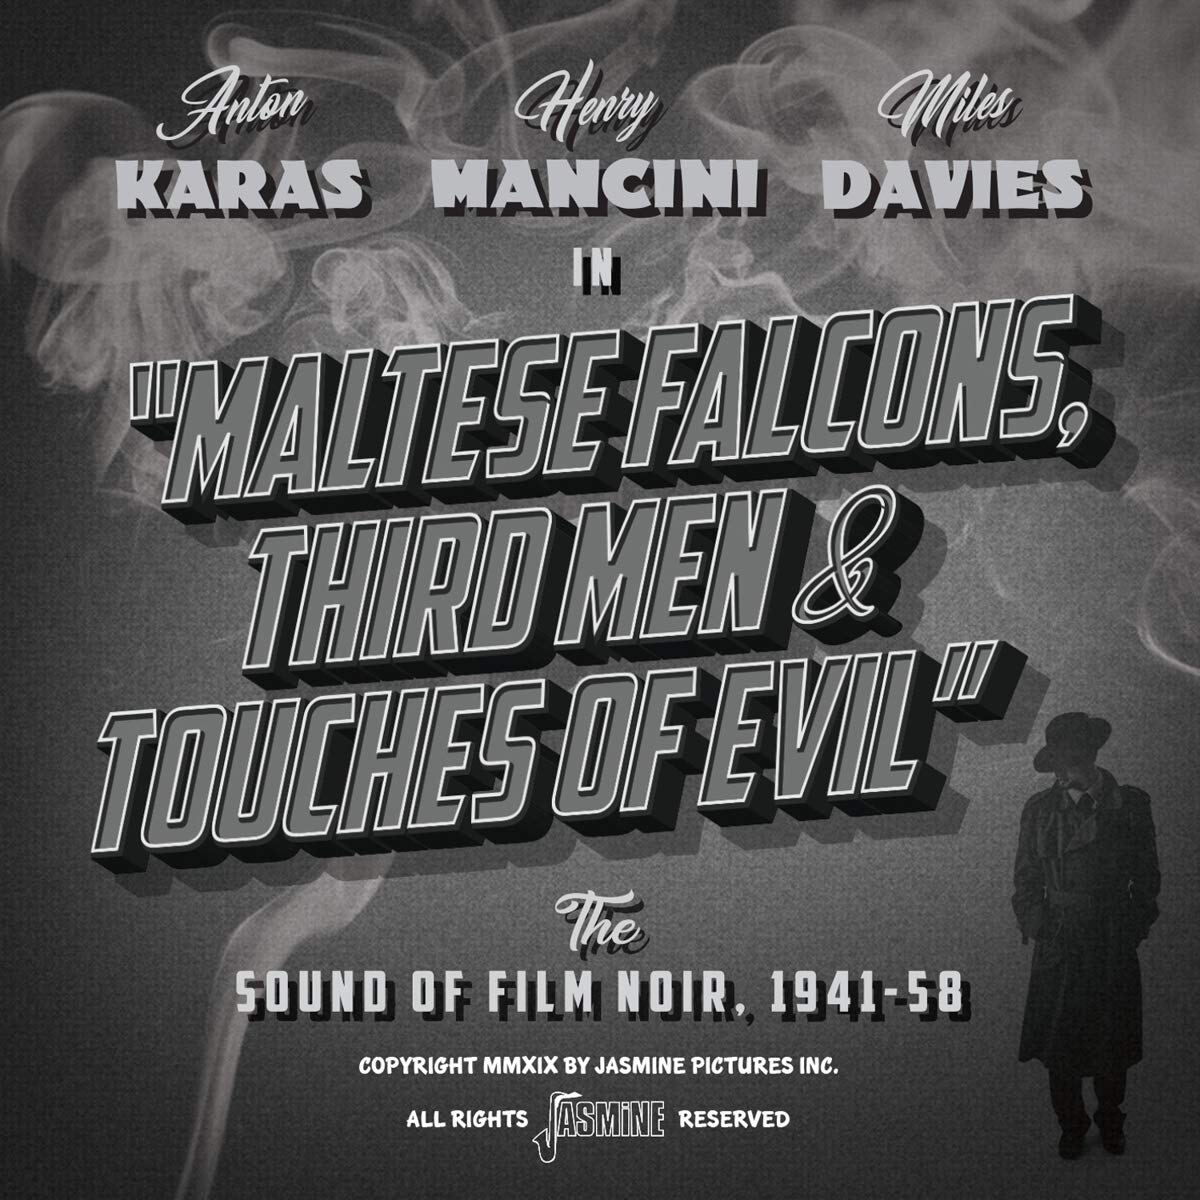 Maltese Falcons, Third Men & Touches of Evil - The Sound Of Film Noir 1941-58